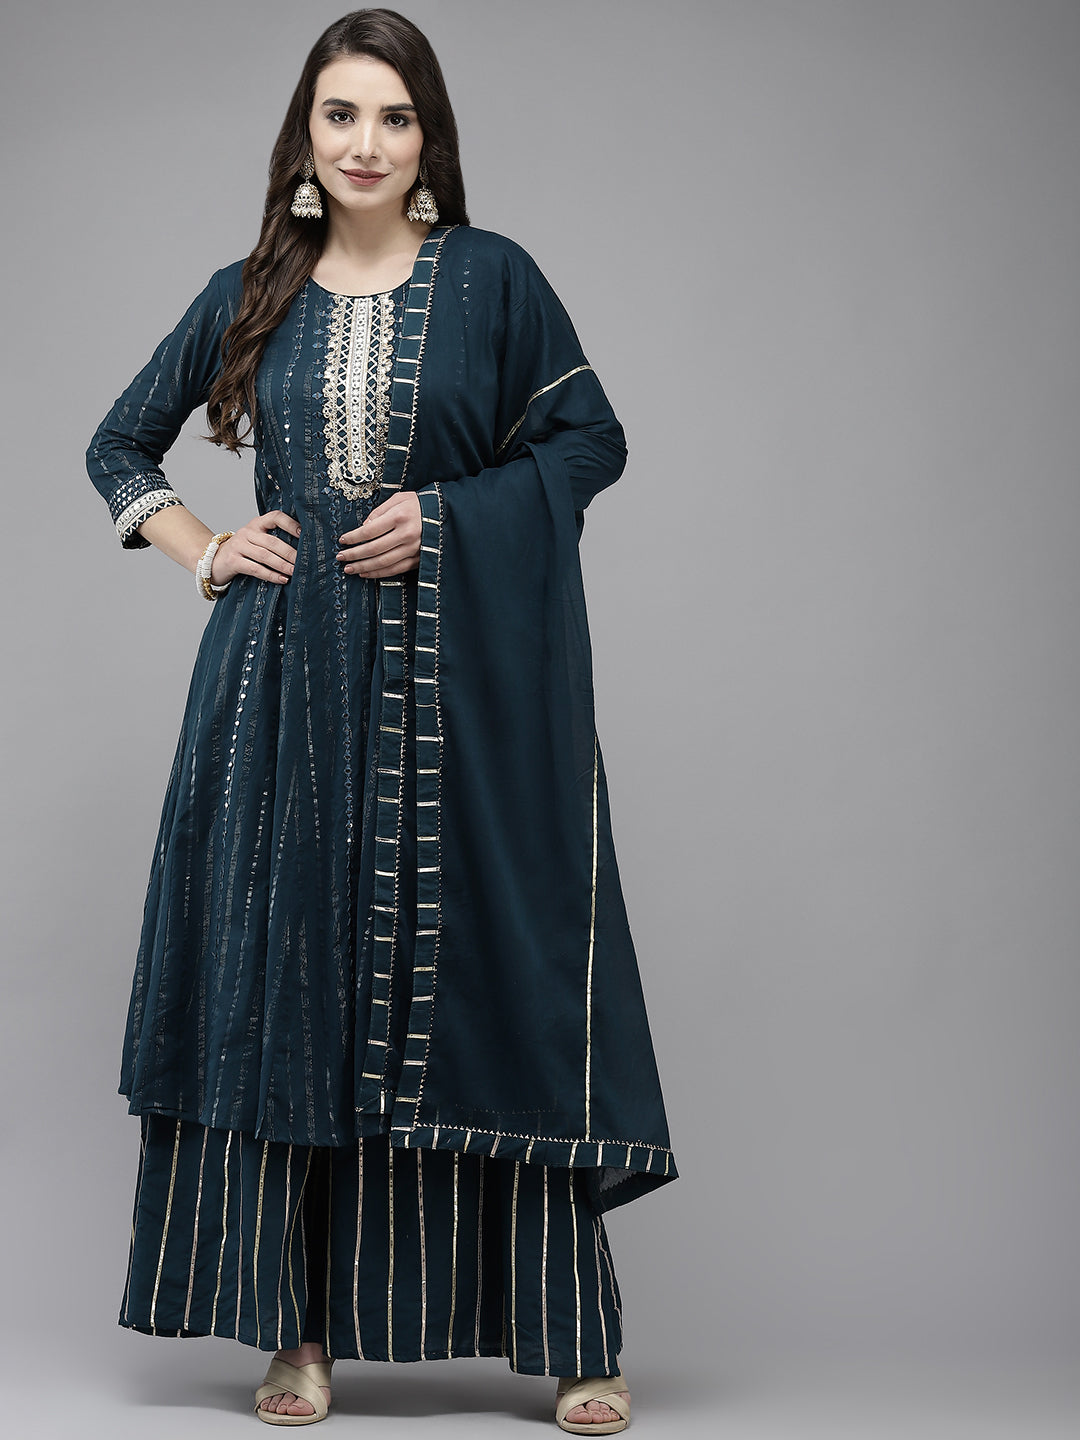 Ishin Women's Cotton Blend Teal Embroidered Anarkali Kurta Sharara Dupatta Set